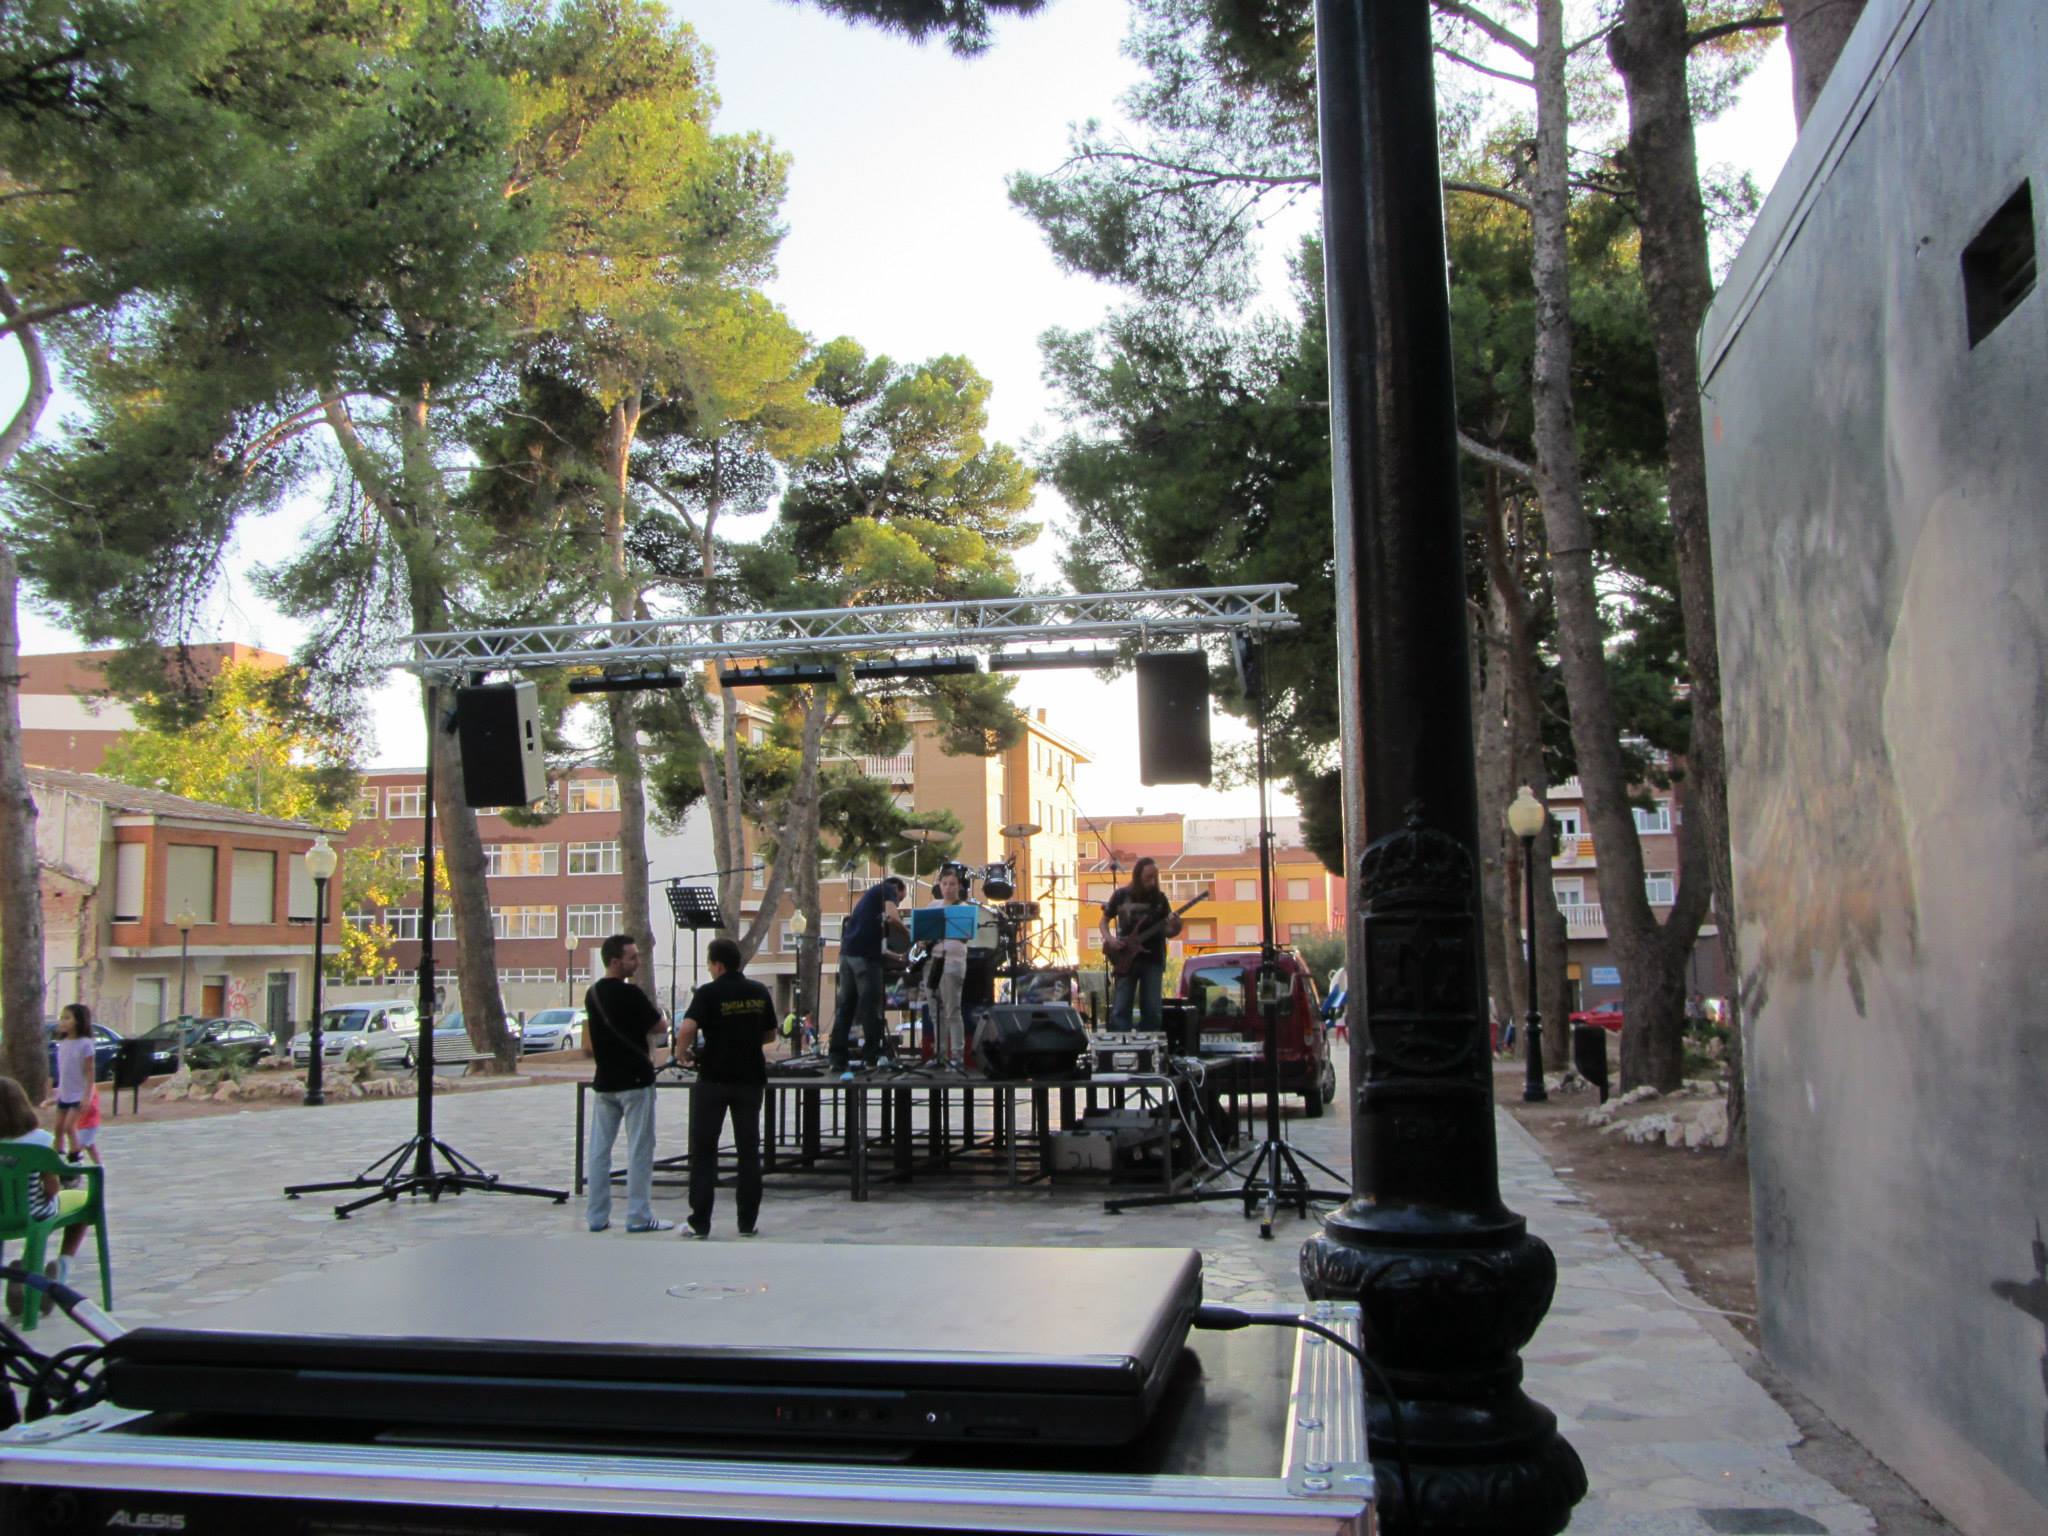 Local group concert @ Ibi, Alicante (Spain)